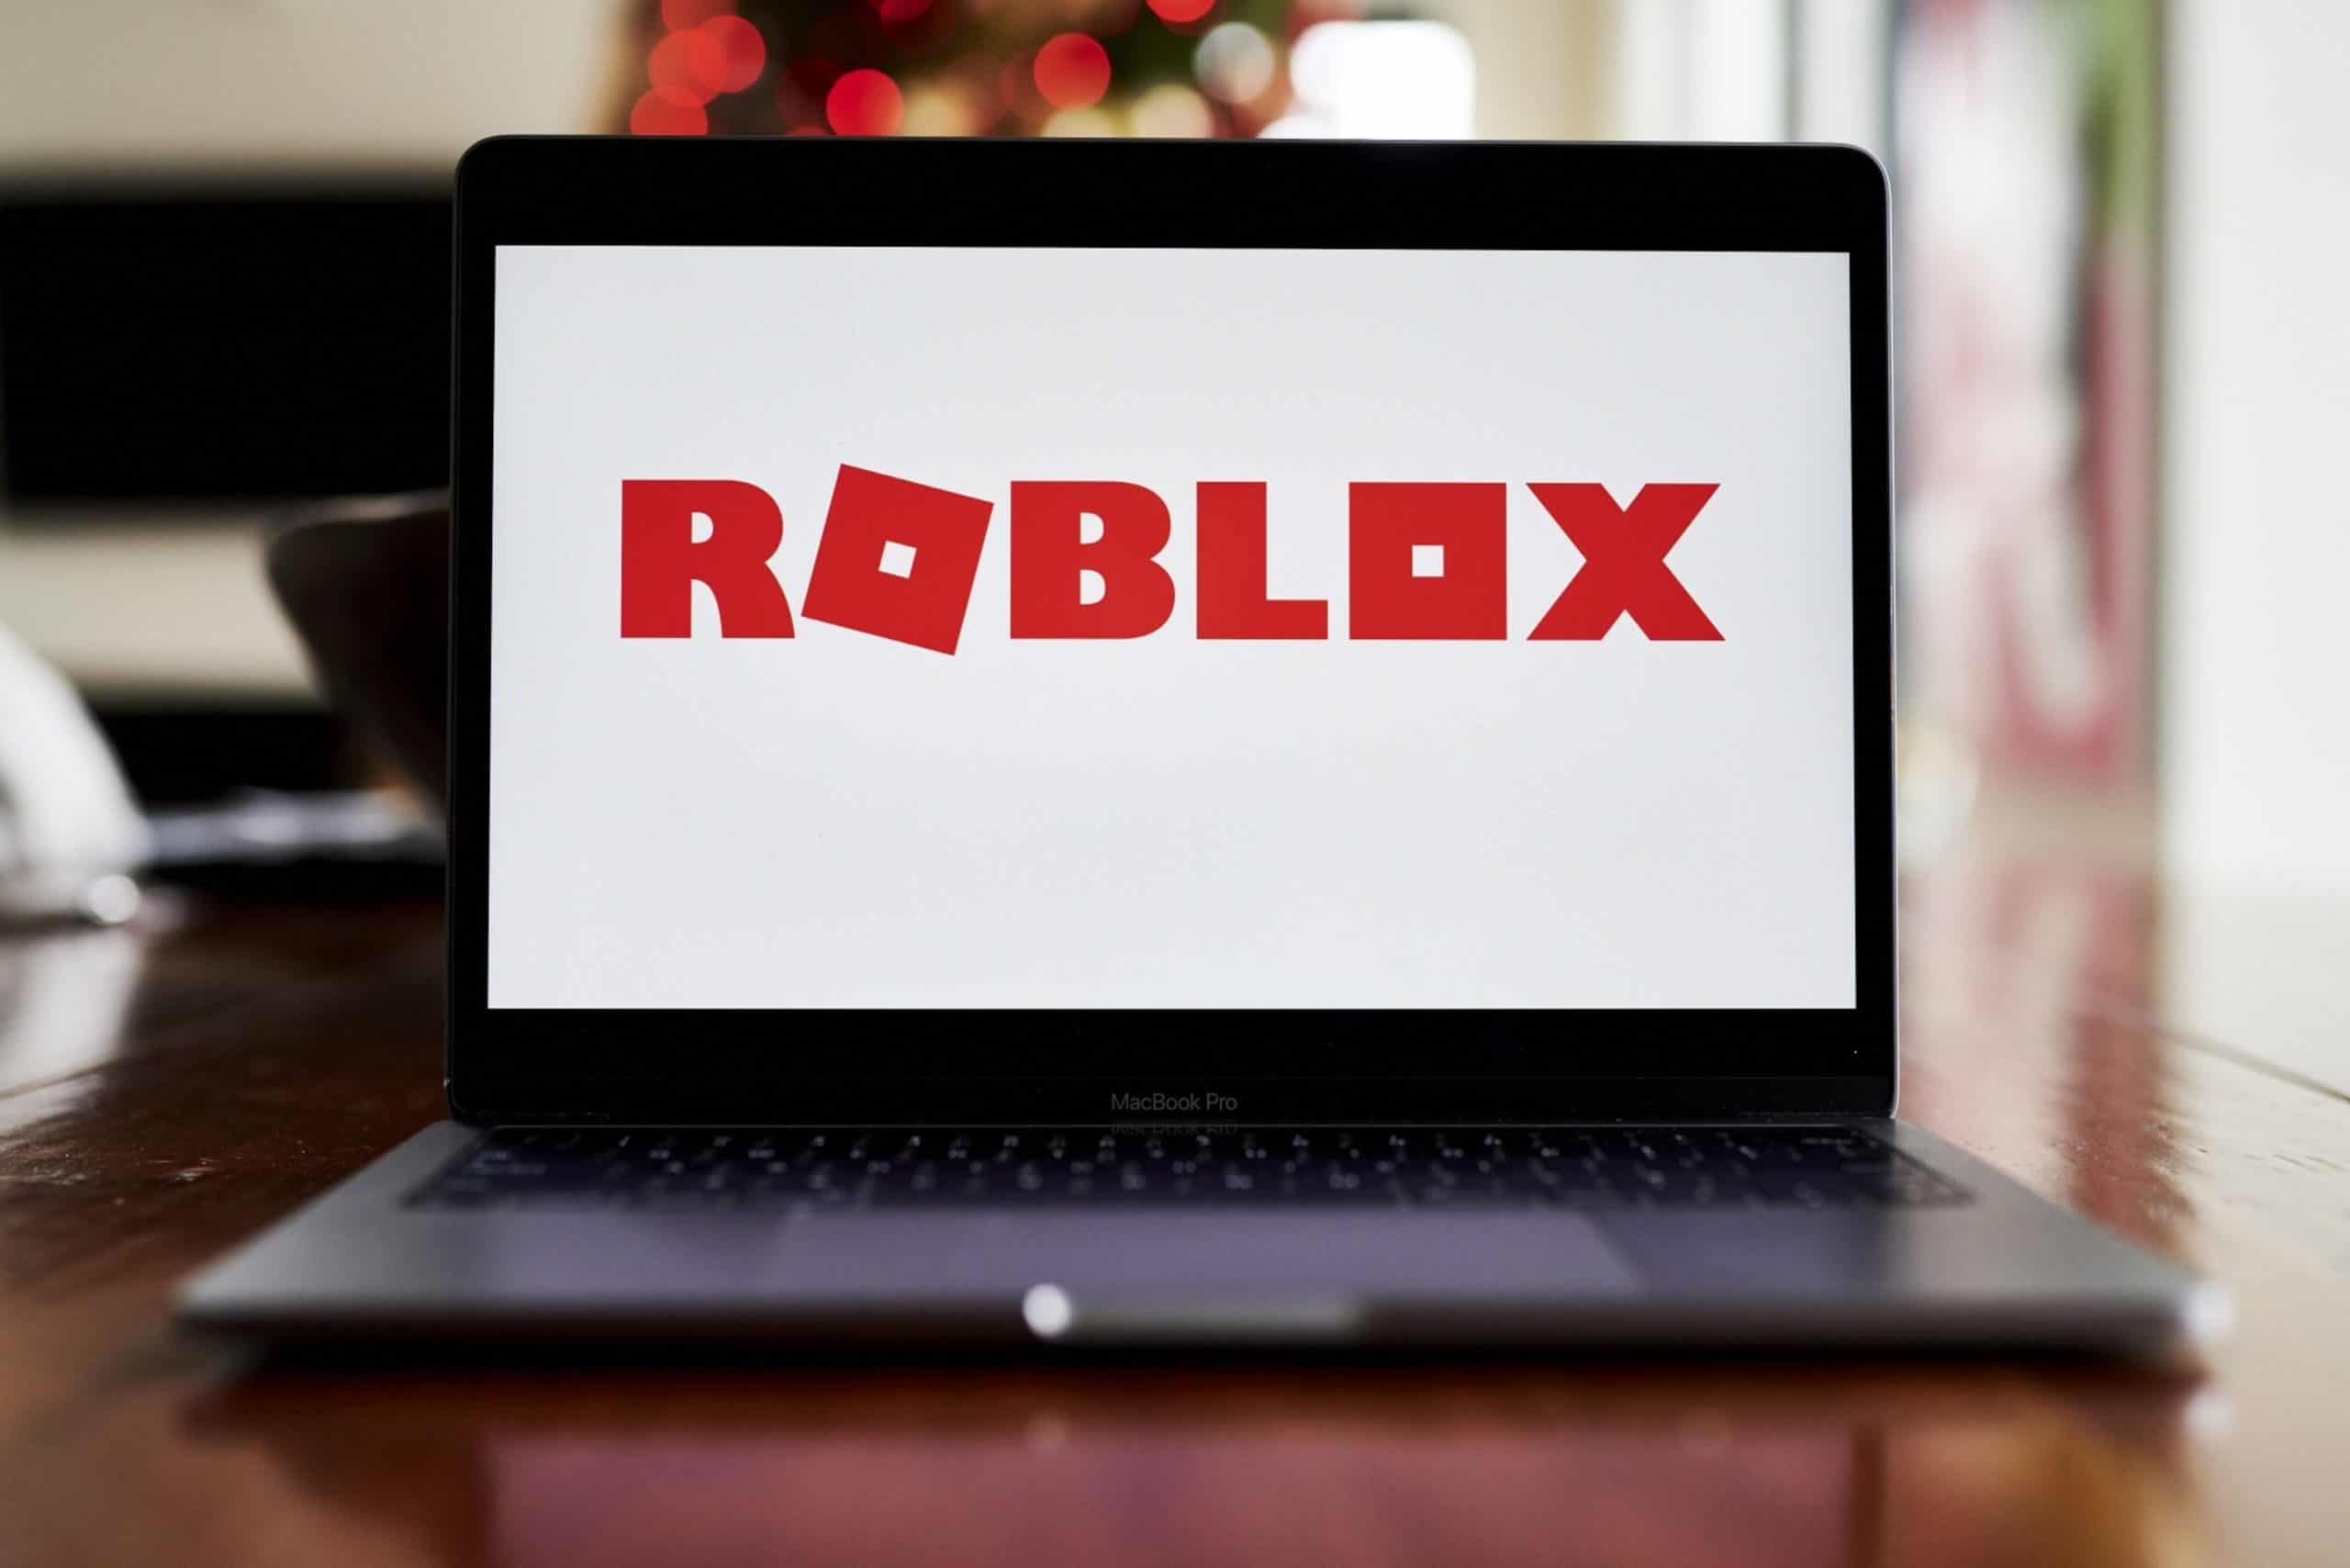 Popular Online Game Developer Roblox Goes Public In Rare Direct Listing - macbook pro roblox